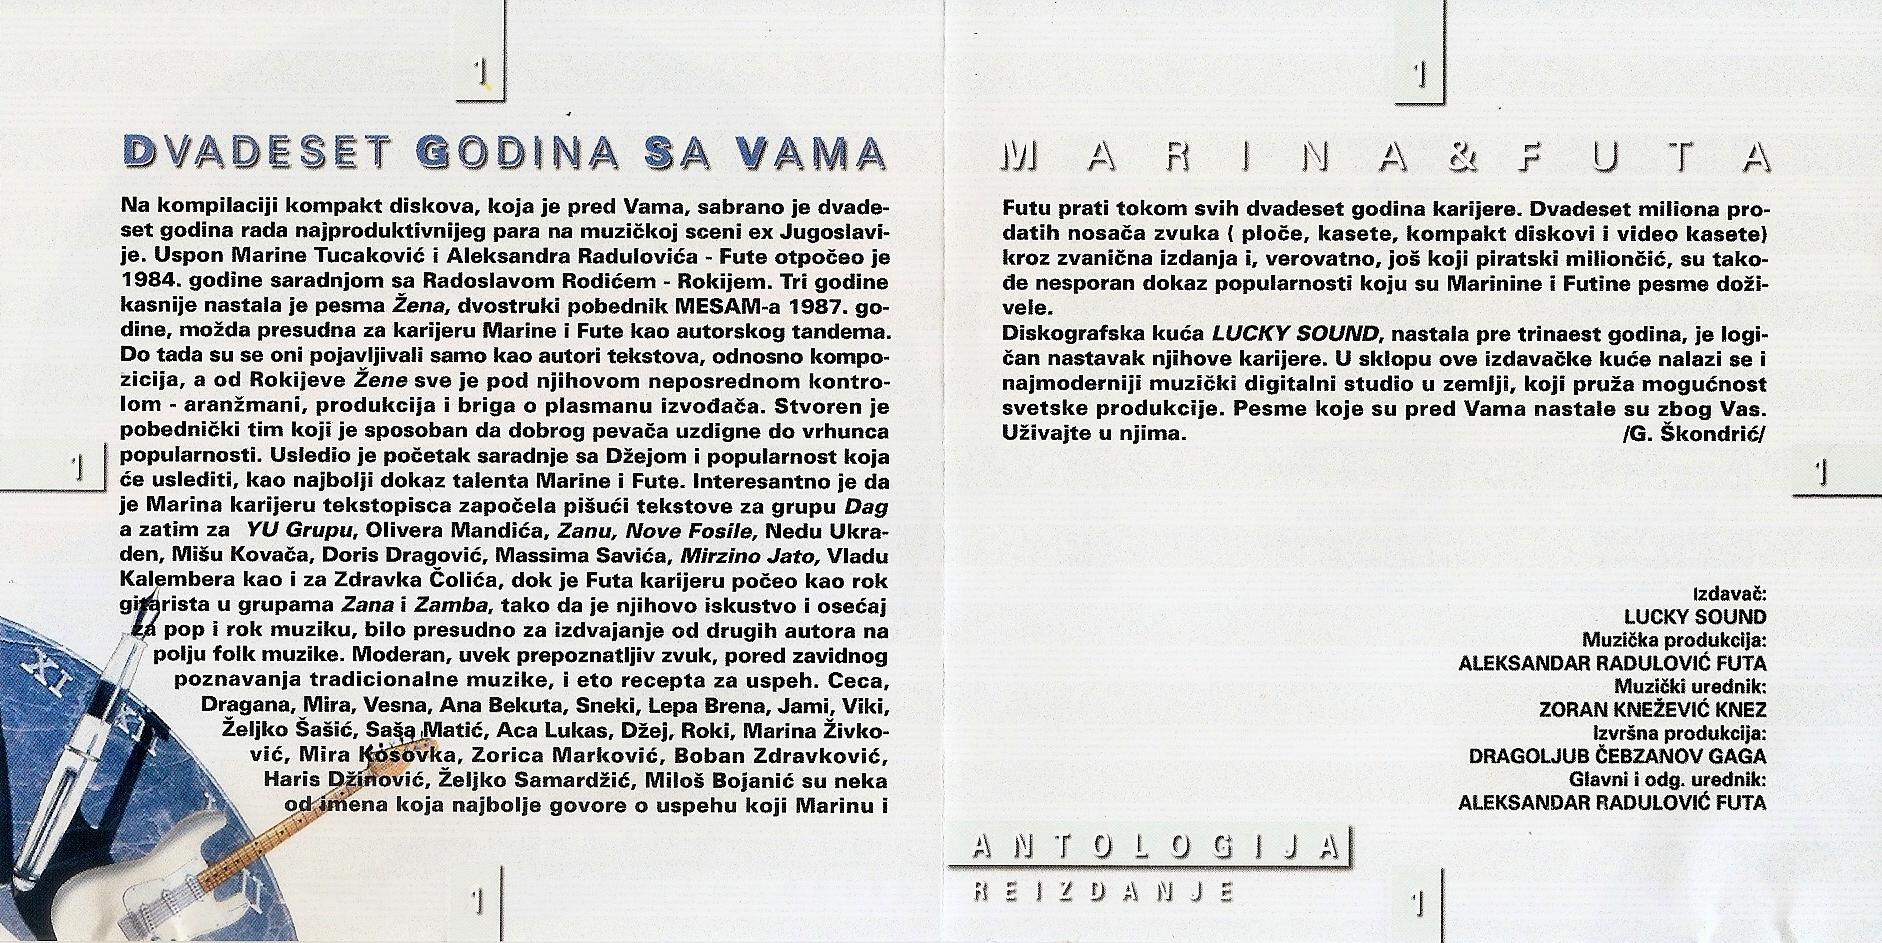 Antologija Marina Futa CD 01 6